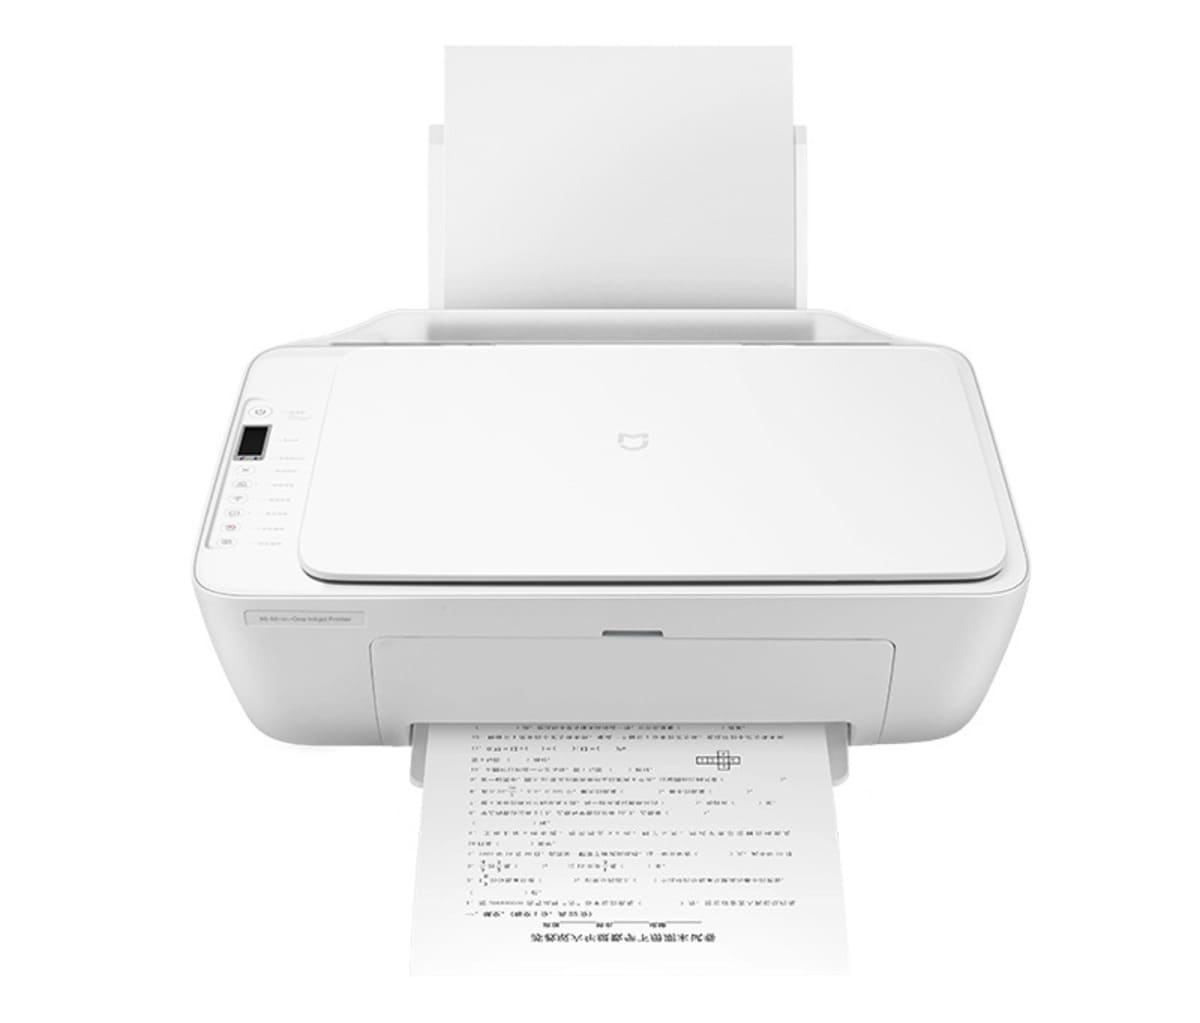 Pocket printer - DiFreight